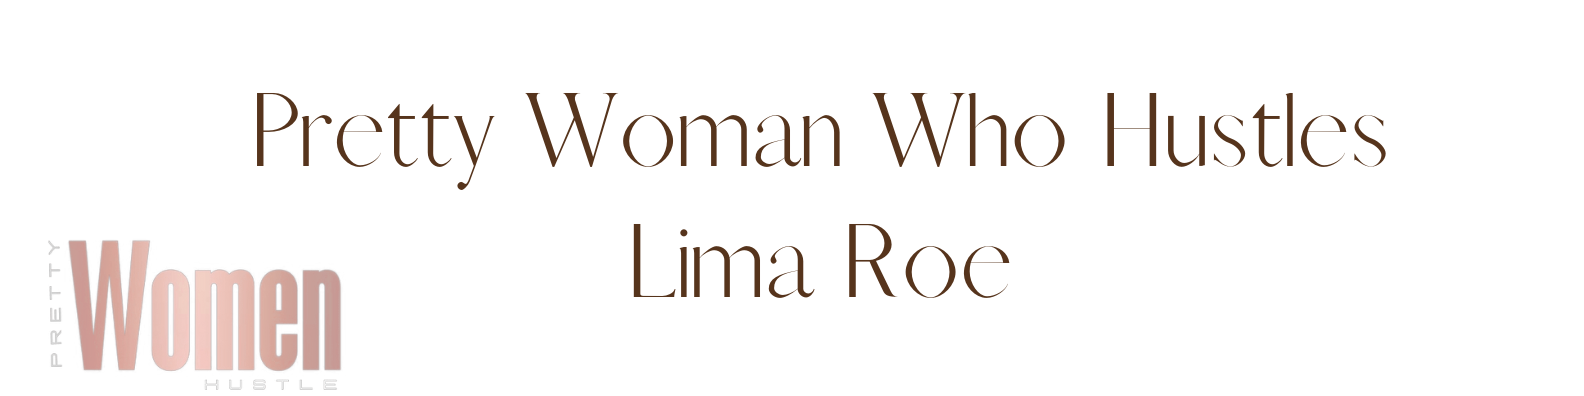 Pretty Women Who Hustles: Lima Roe